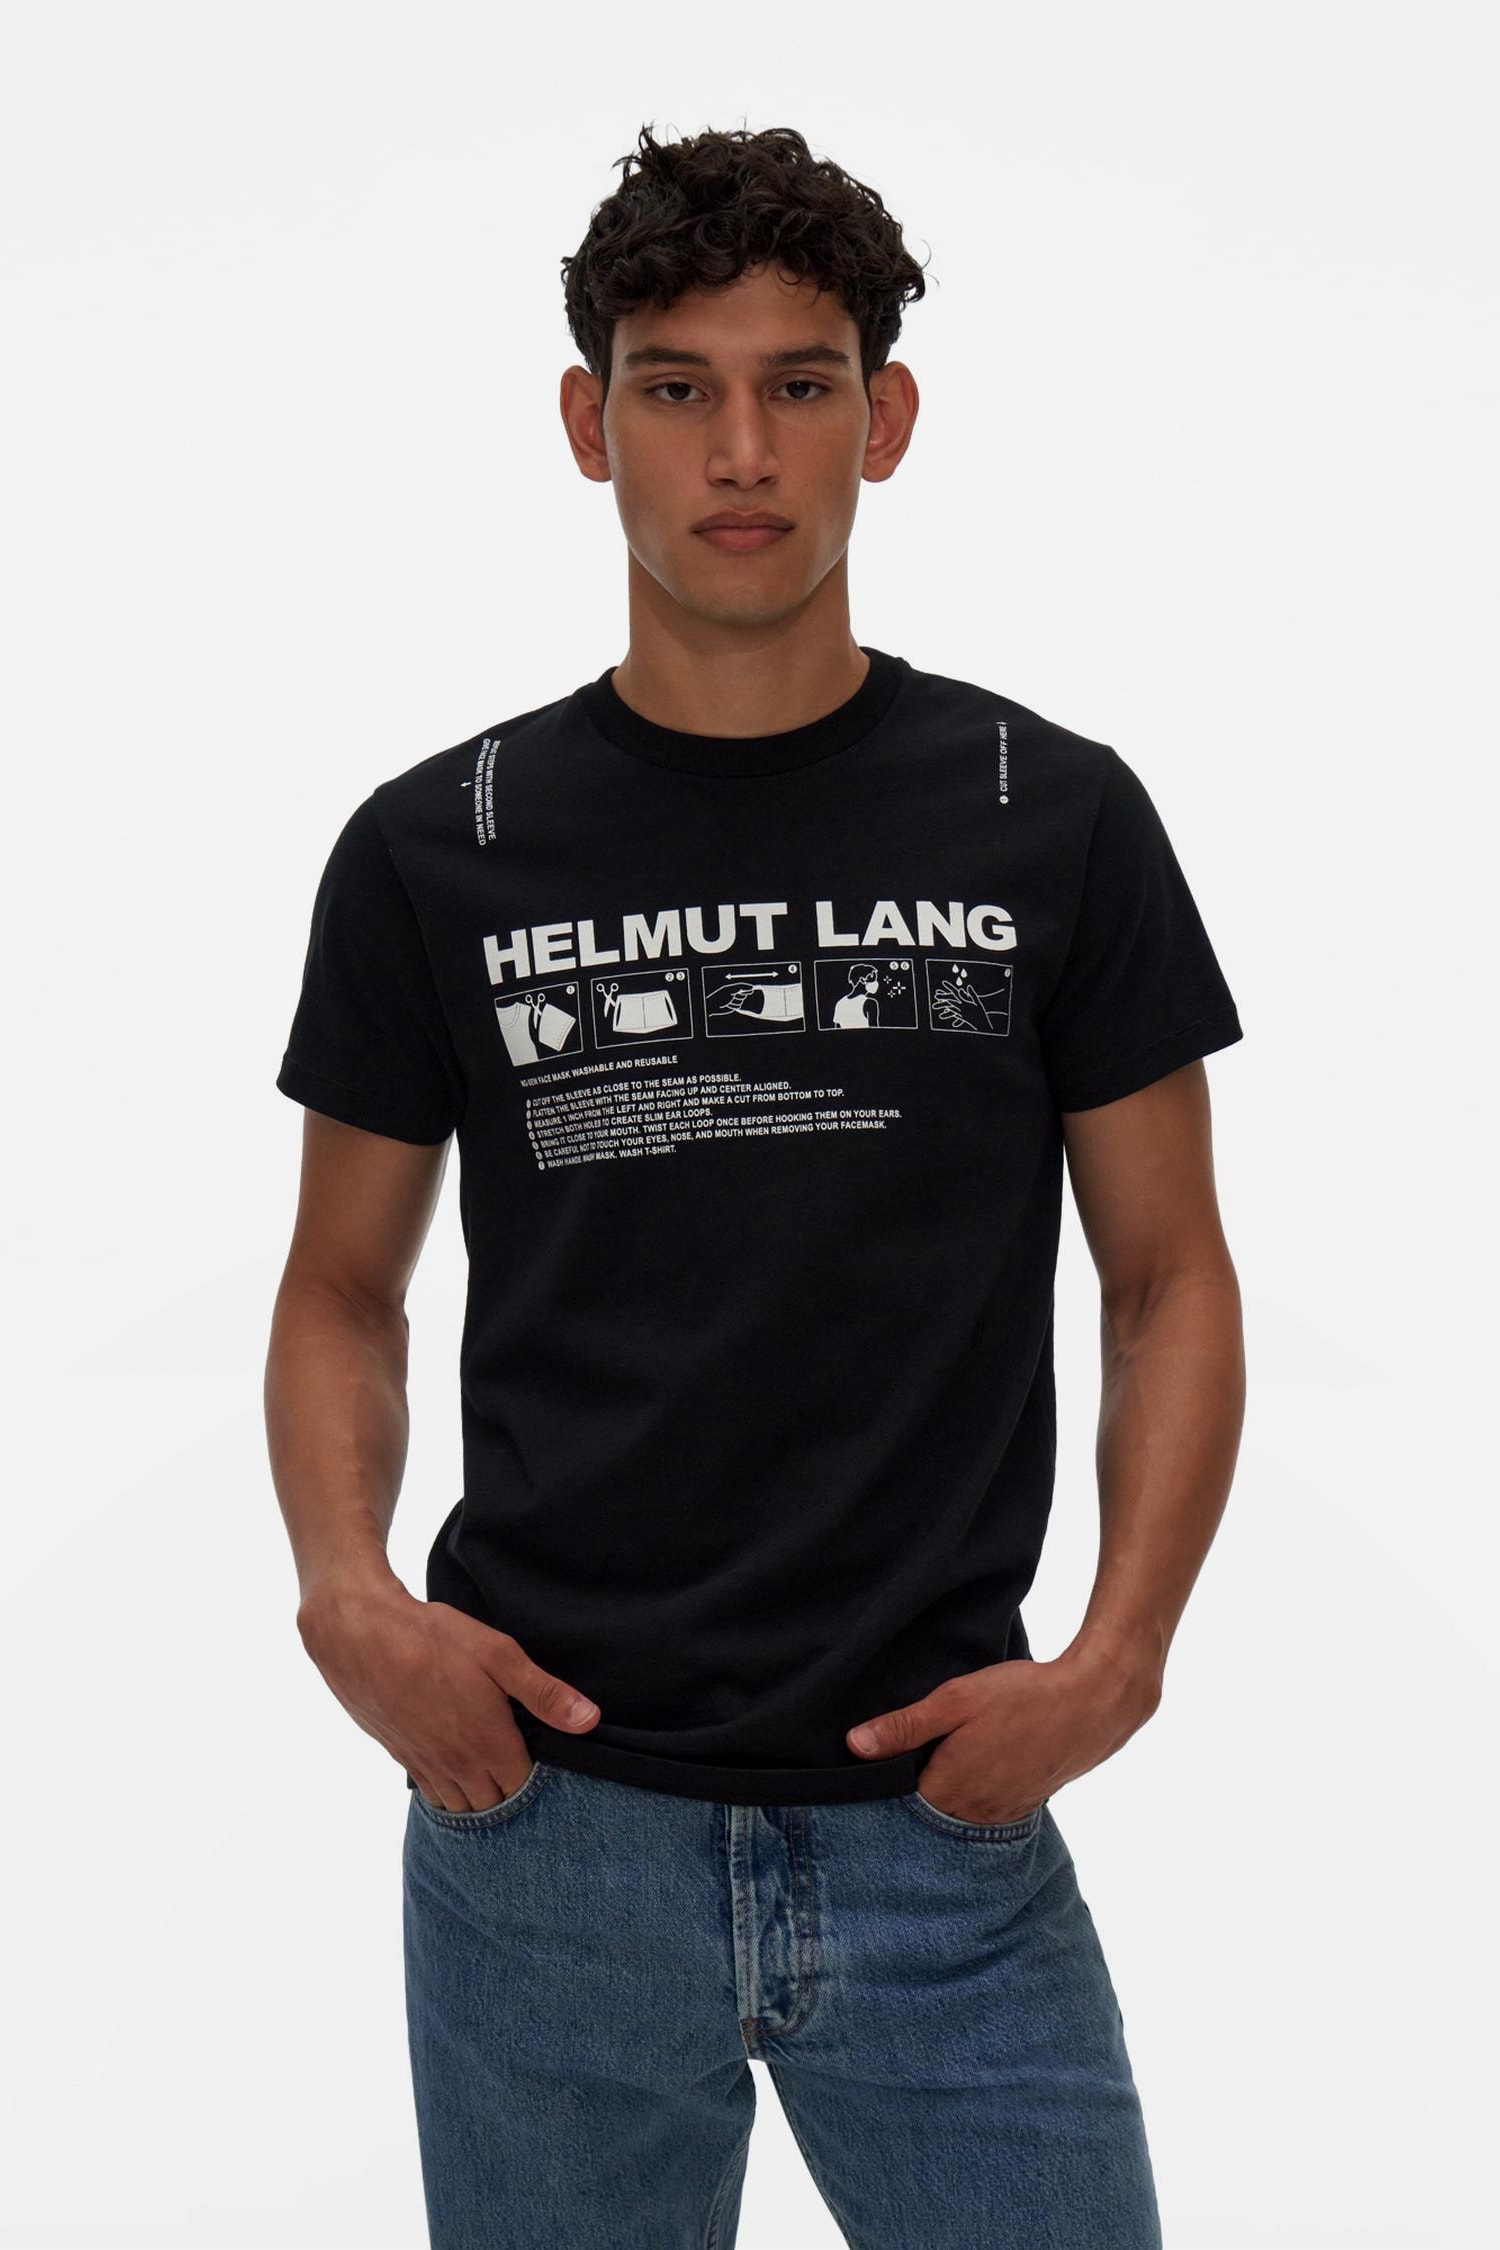 Helmut Lang 2020 T-shirt Contest Winning Designs art  JADE AYLA JOHANNESBURG, SOUTH AFRICA. MAX PETERS THE NETHERLANDS. CHRISTINA LEHMKUHL BERLIN, GERMANY.